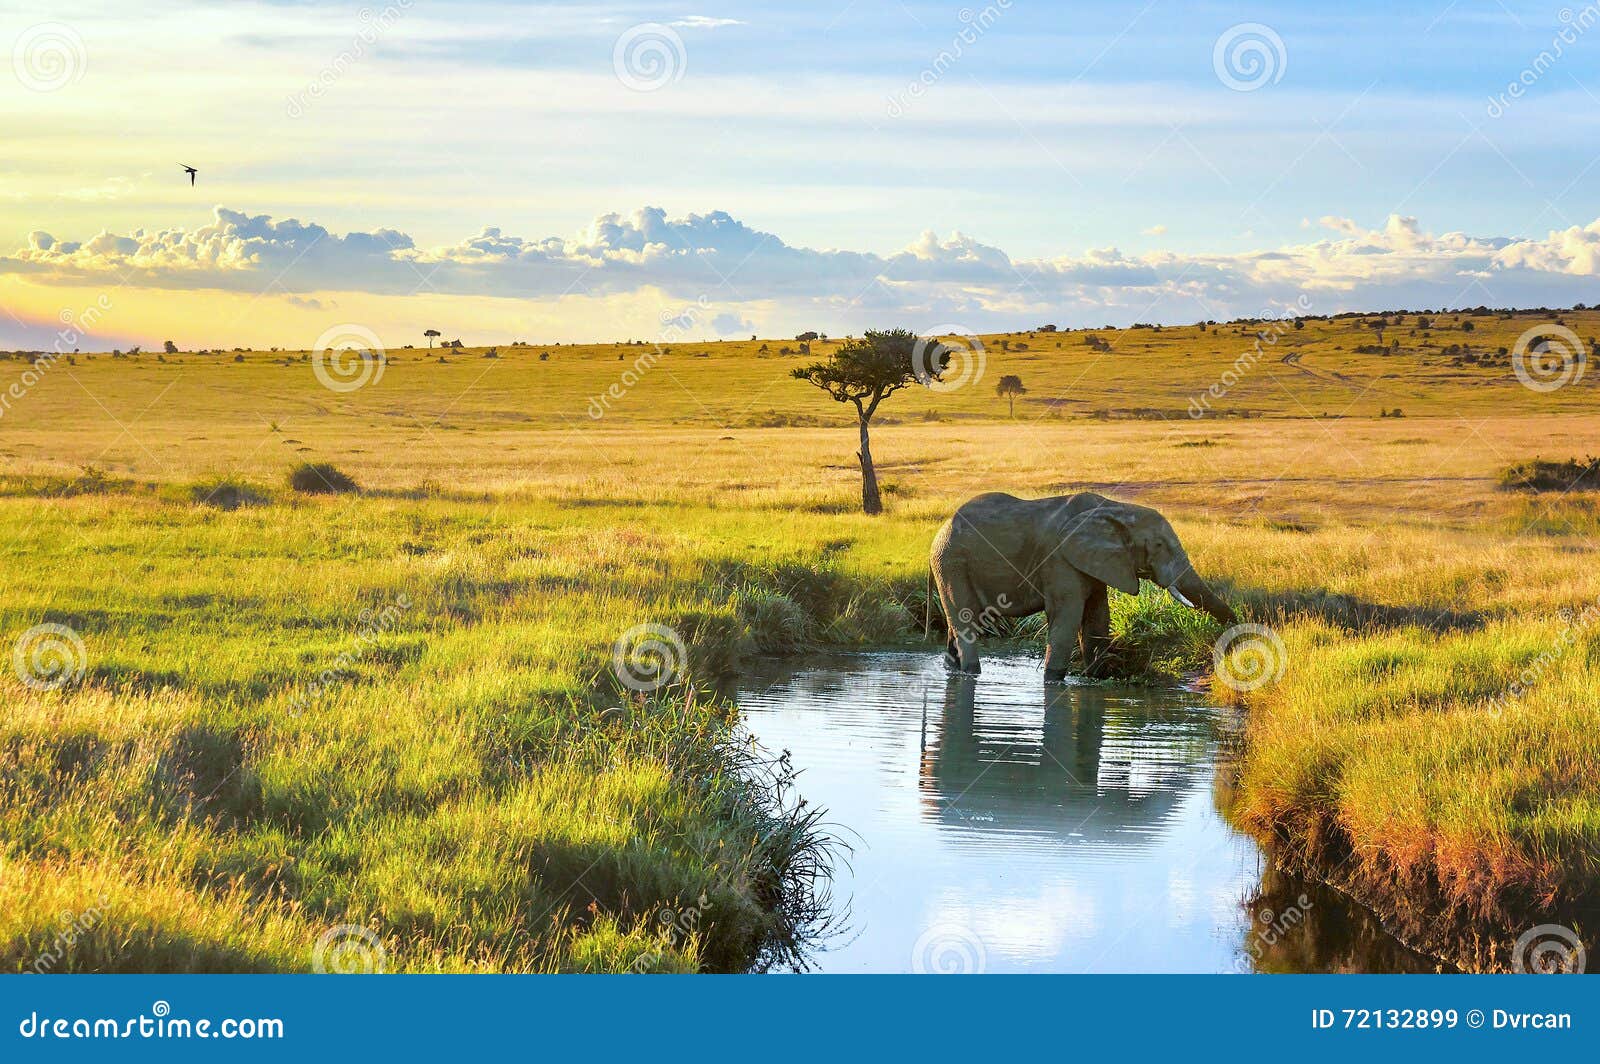 elephant cooling down in the water in masai mara resort, kenya